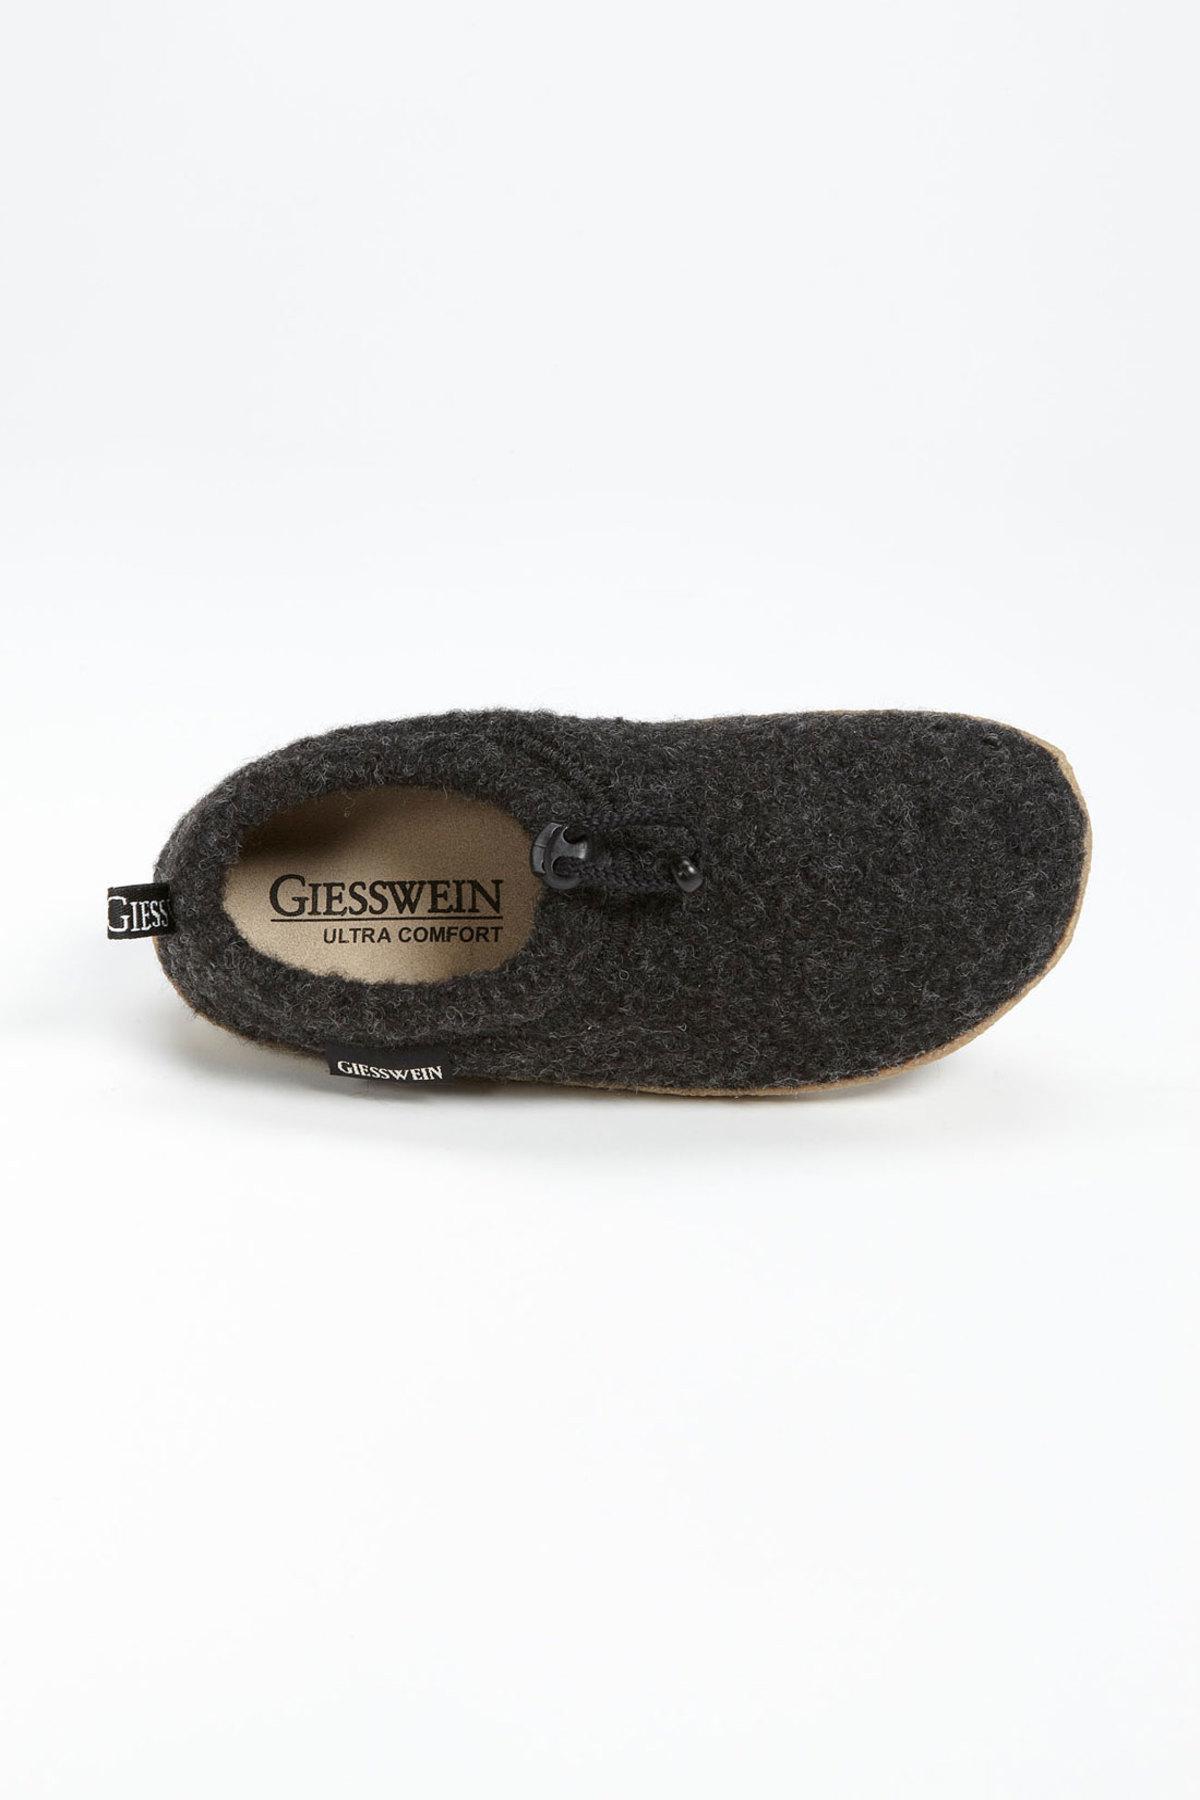 the giesswein vent lodge slipper